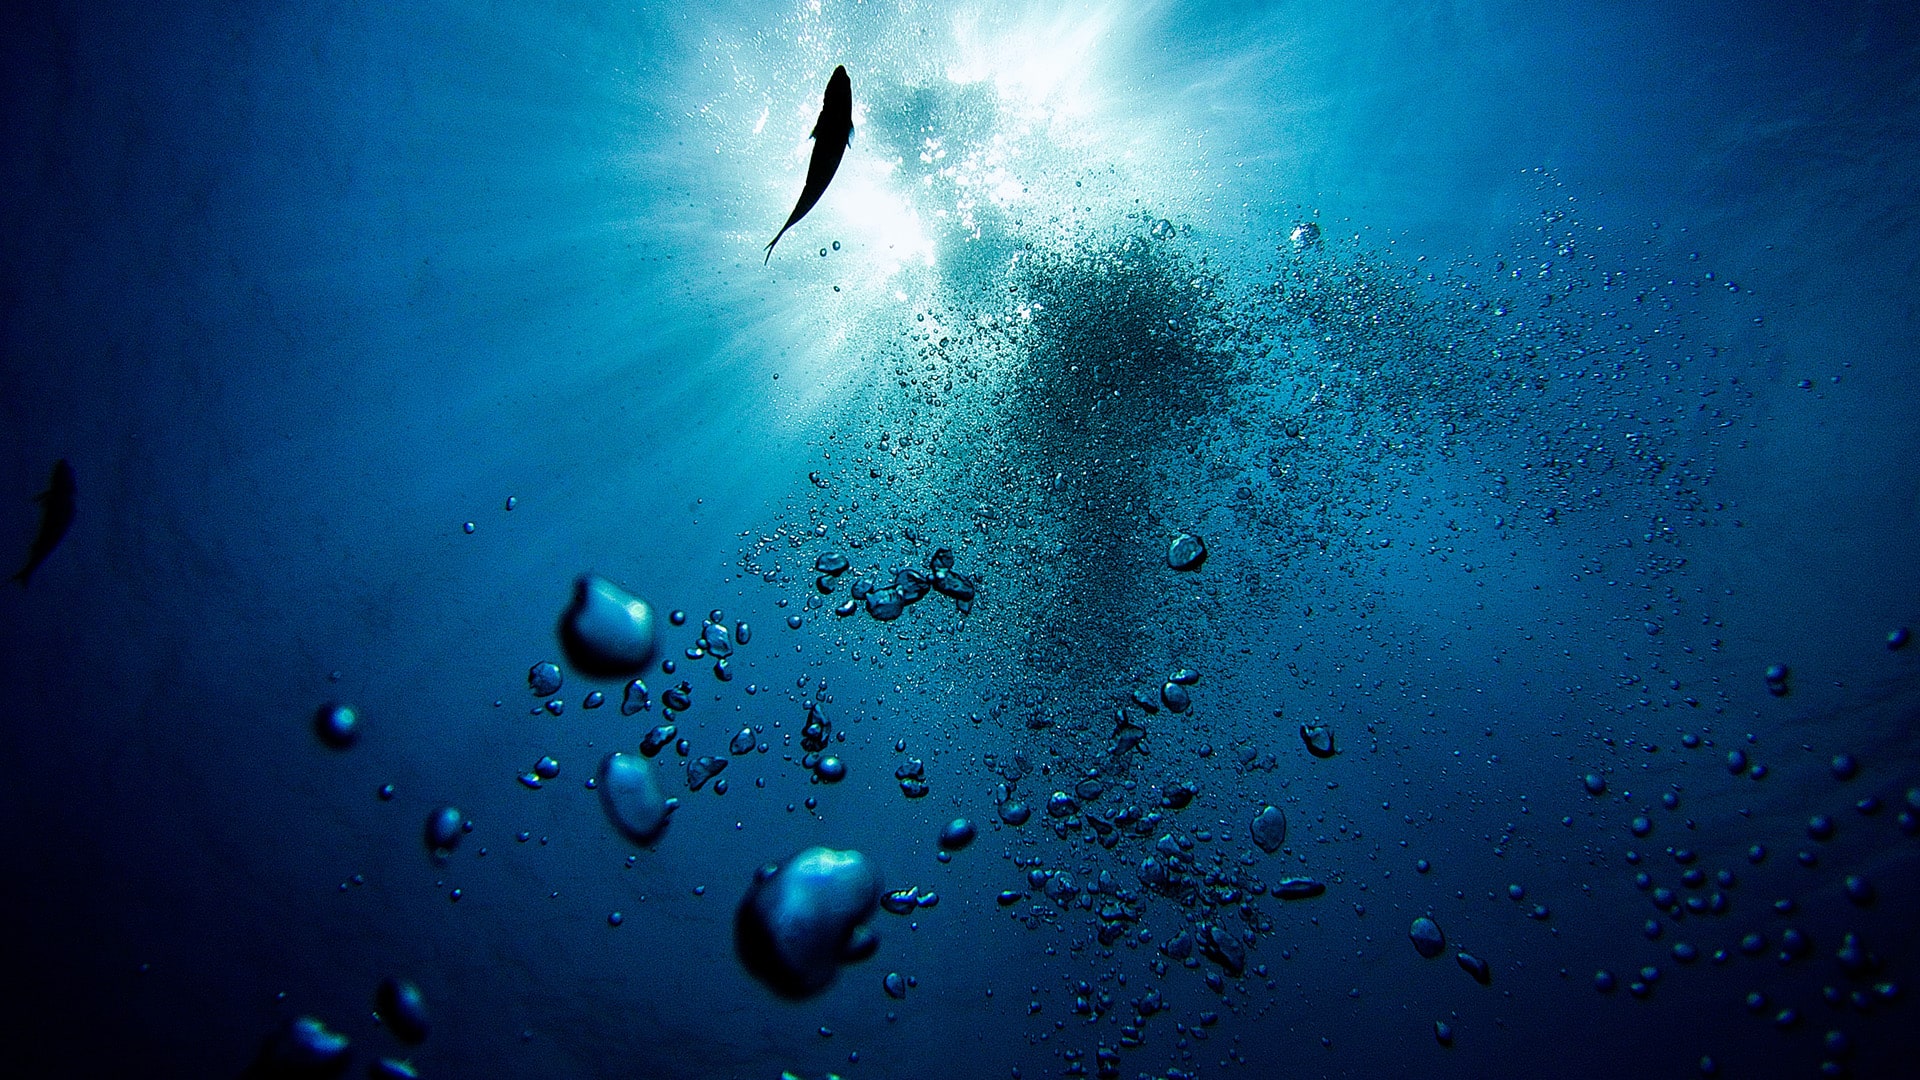 Underwater looking up